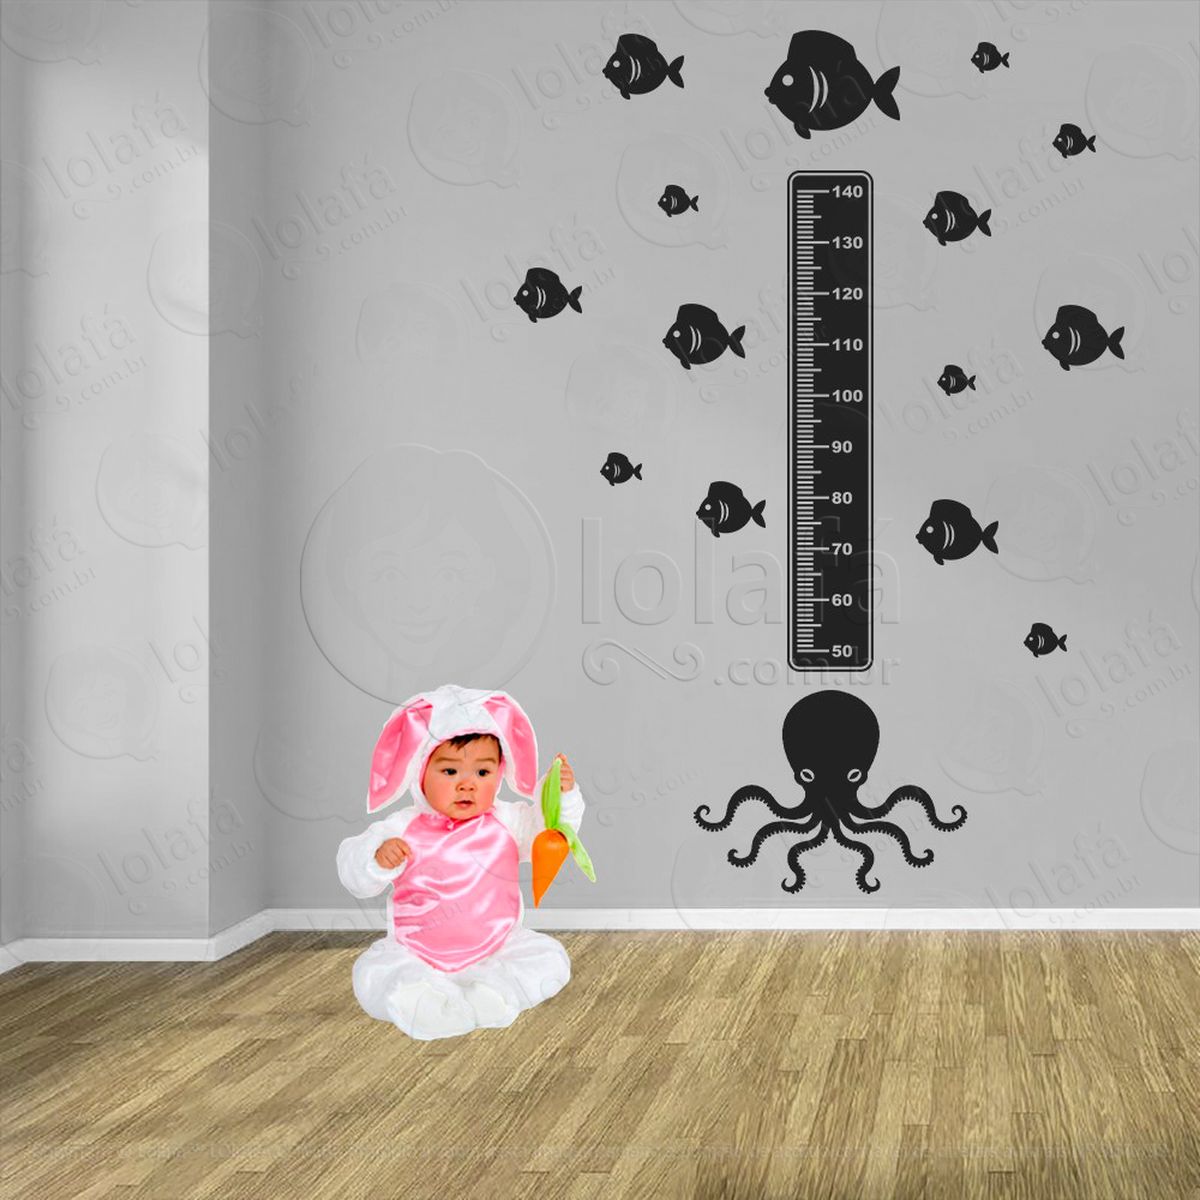 polvo e peixes adesivo régua de crescimento infantil, medidor de altura para quarto, porta e parede - mod:134